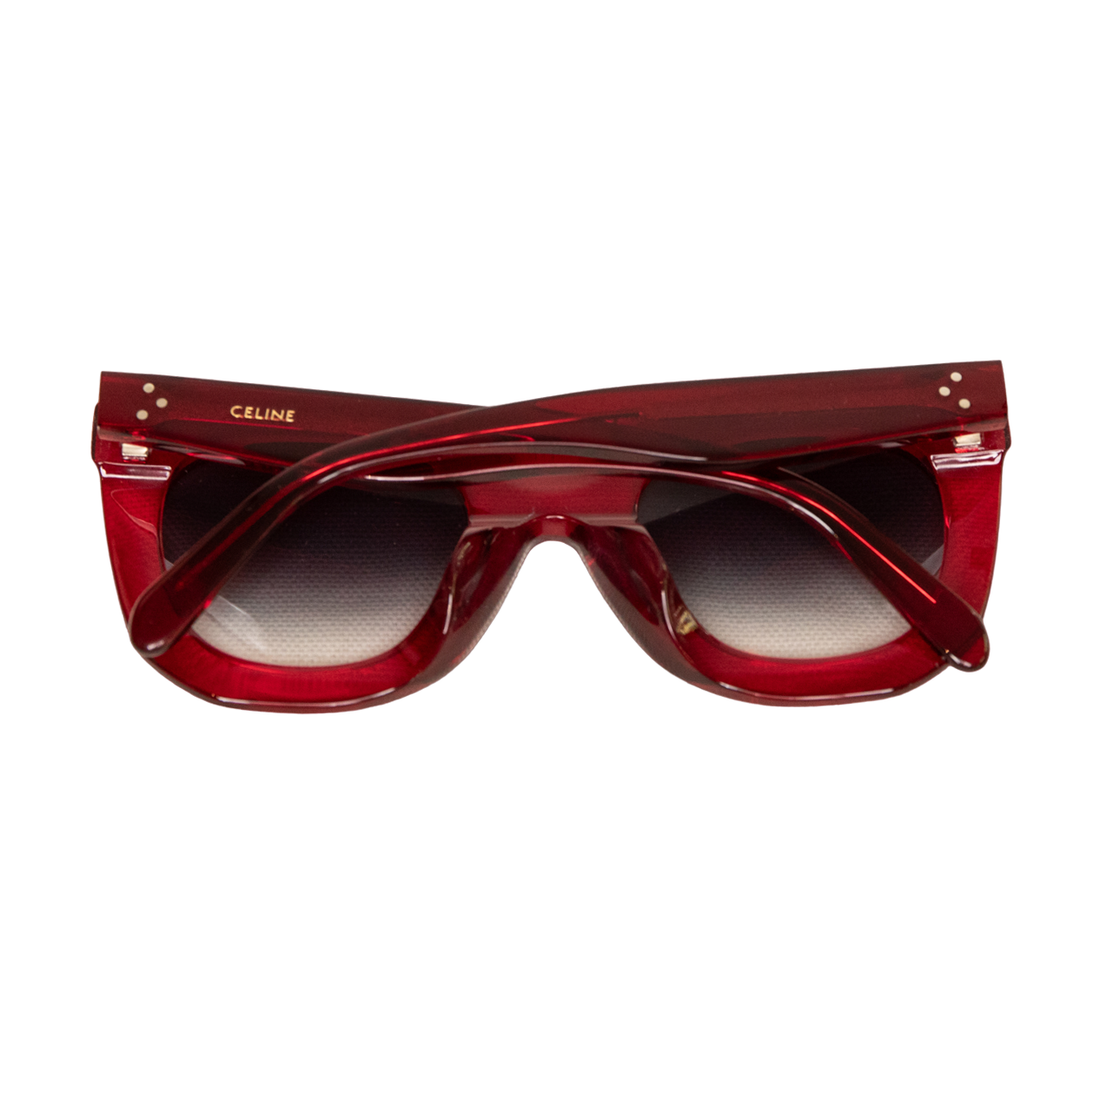 Celine red sunglasses with gray gradient lenses